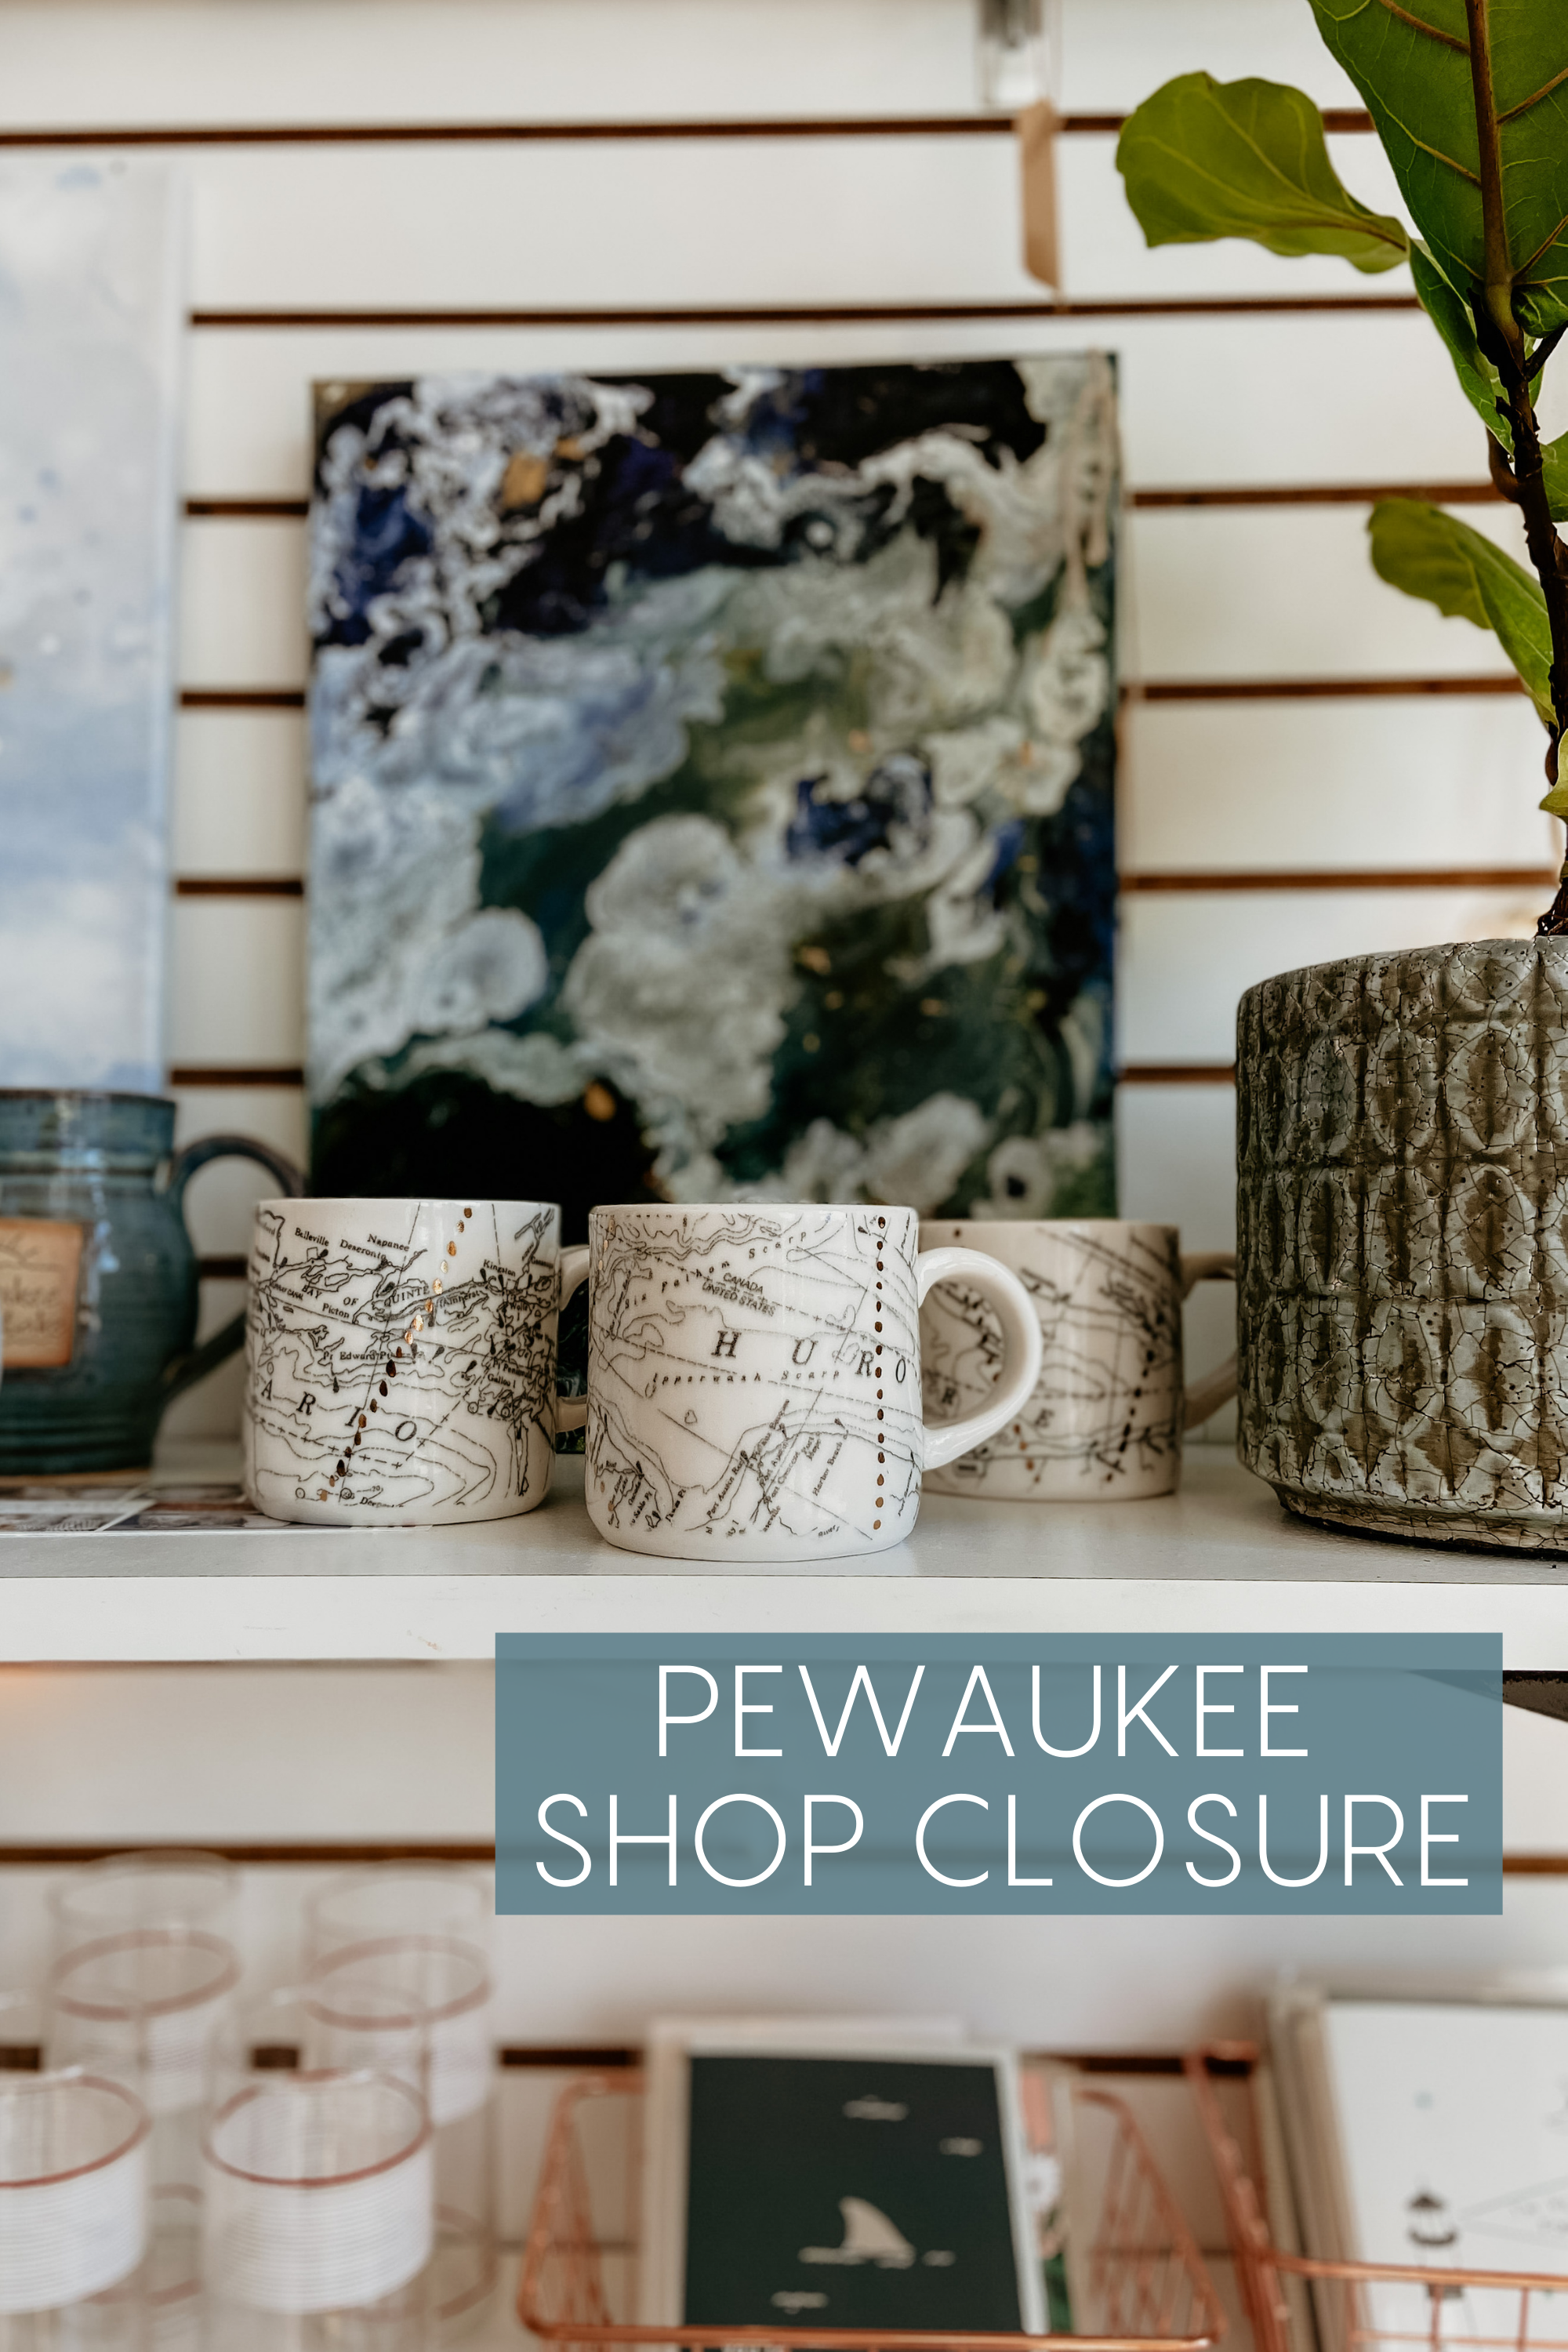 Pewaukee Shop Closure